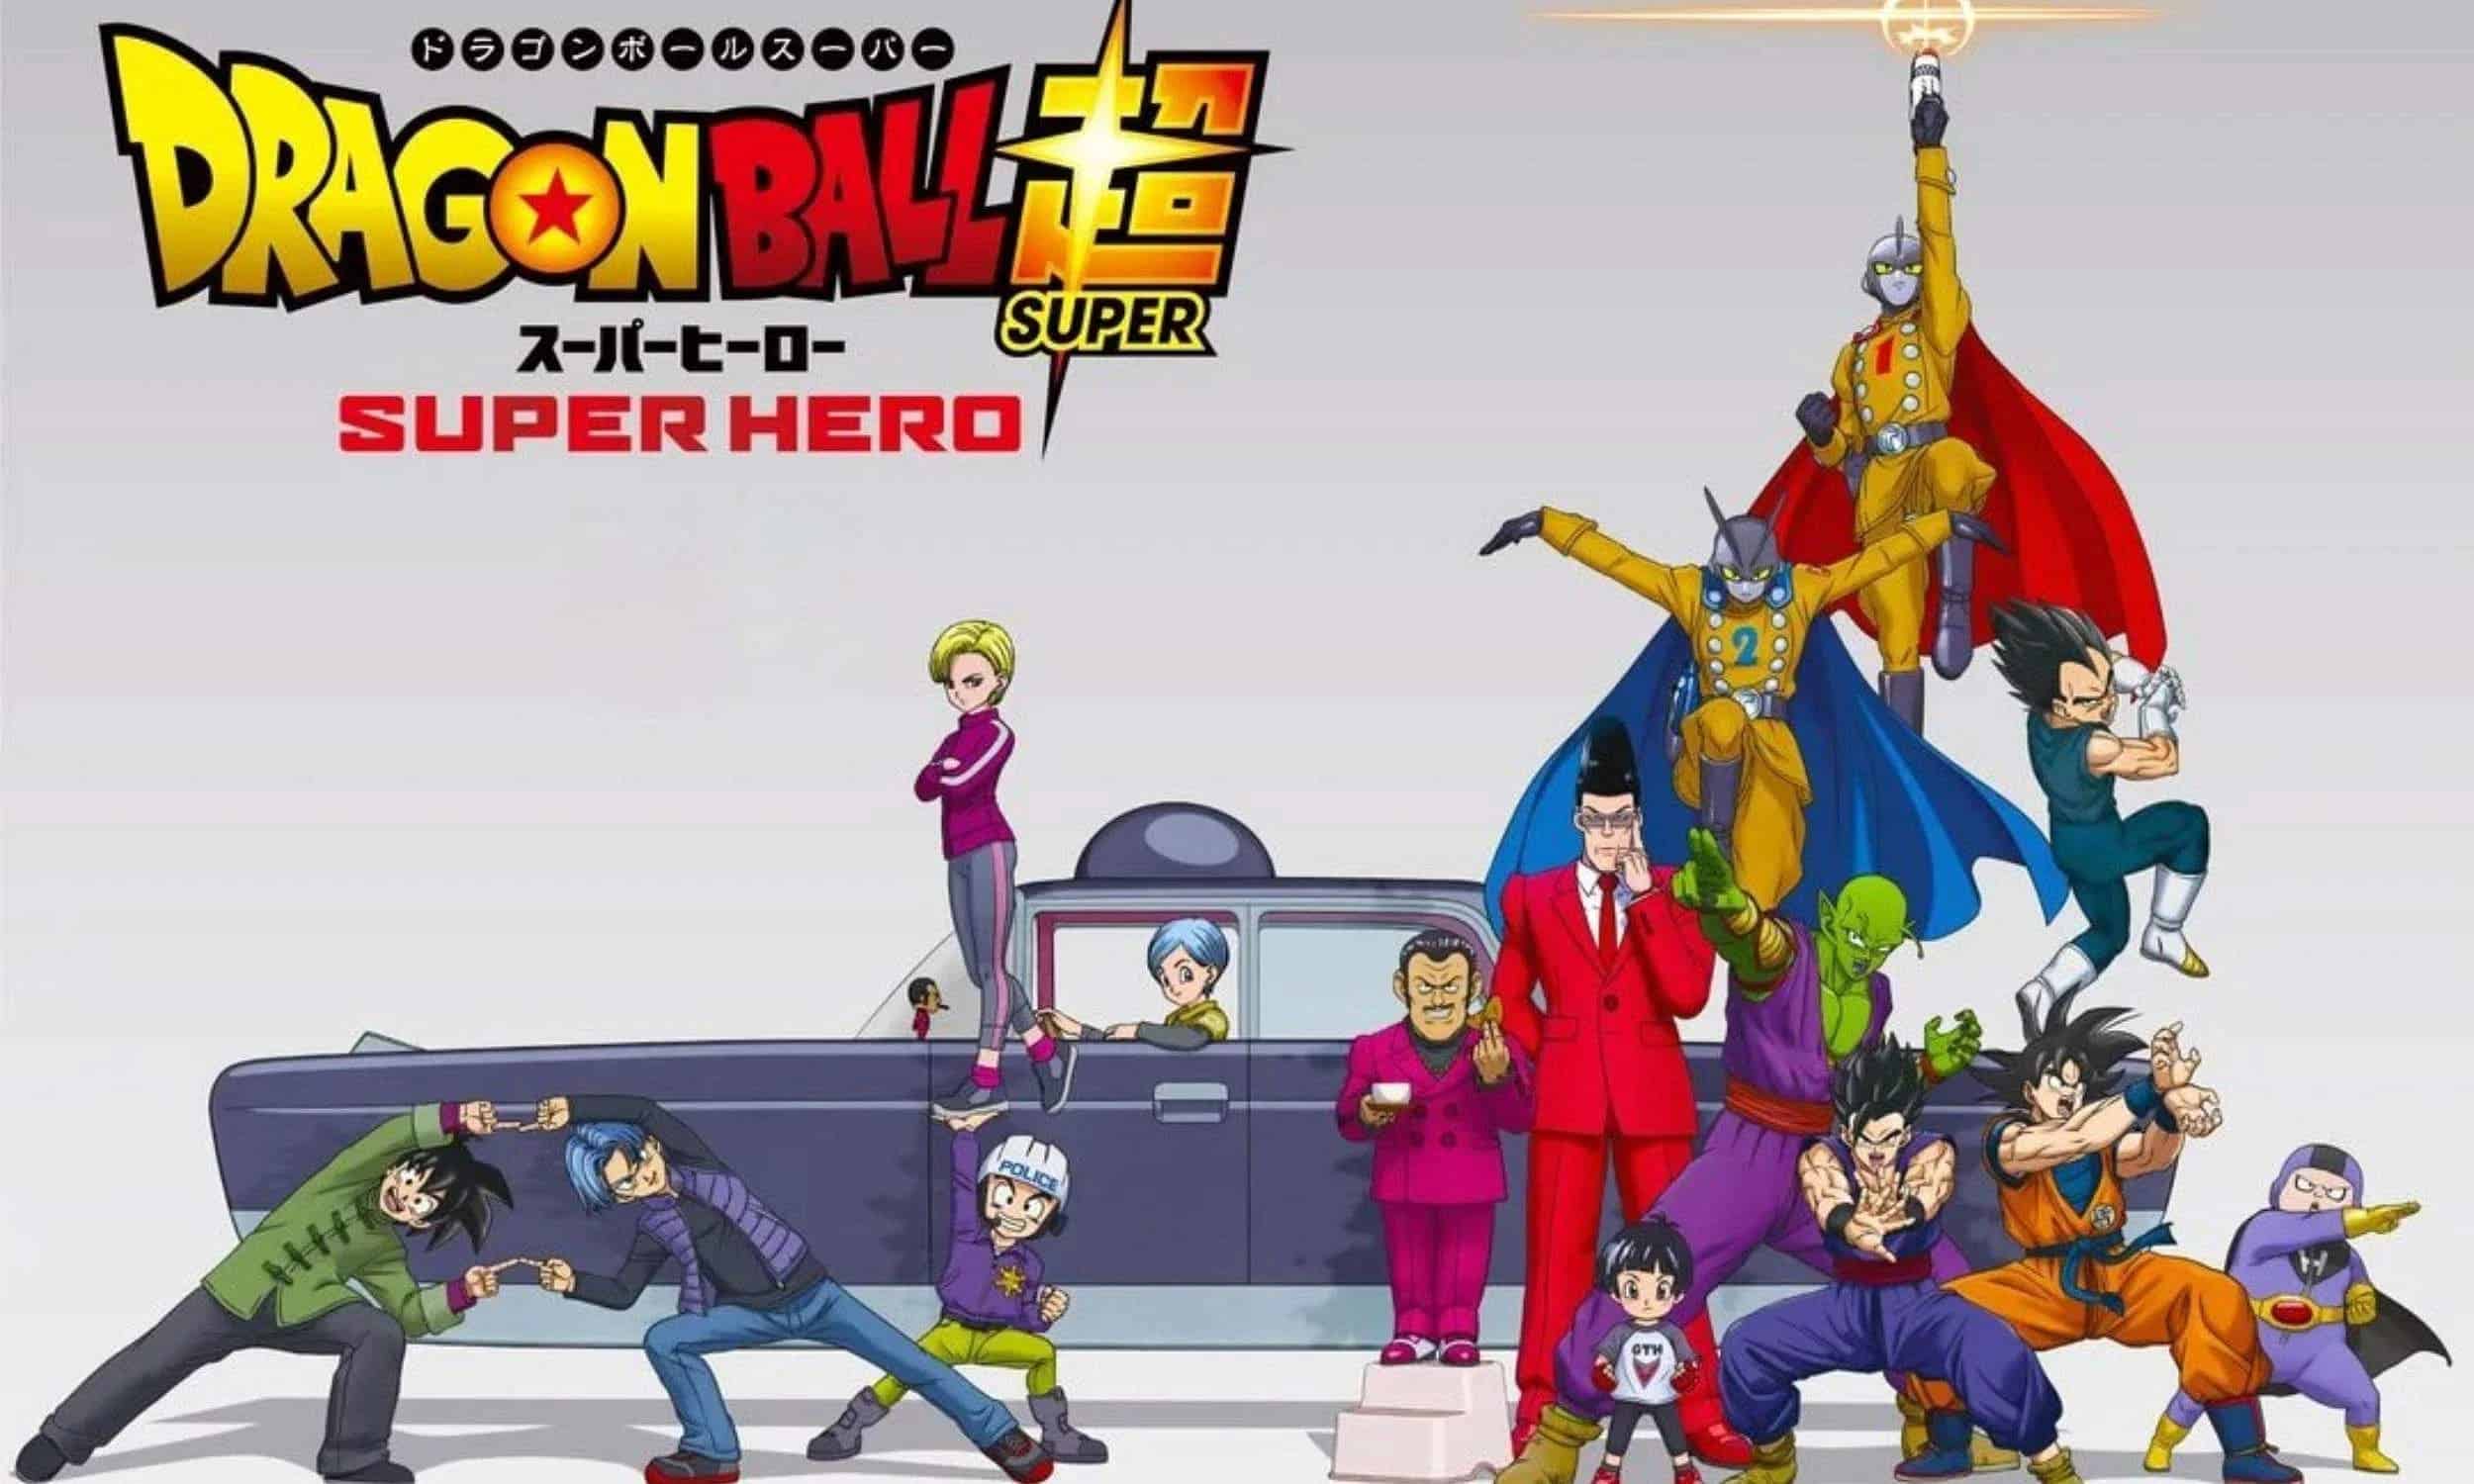 Dragon Ball Super: Super Hero to be Streamed on Crunchyroll